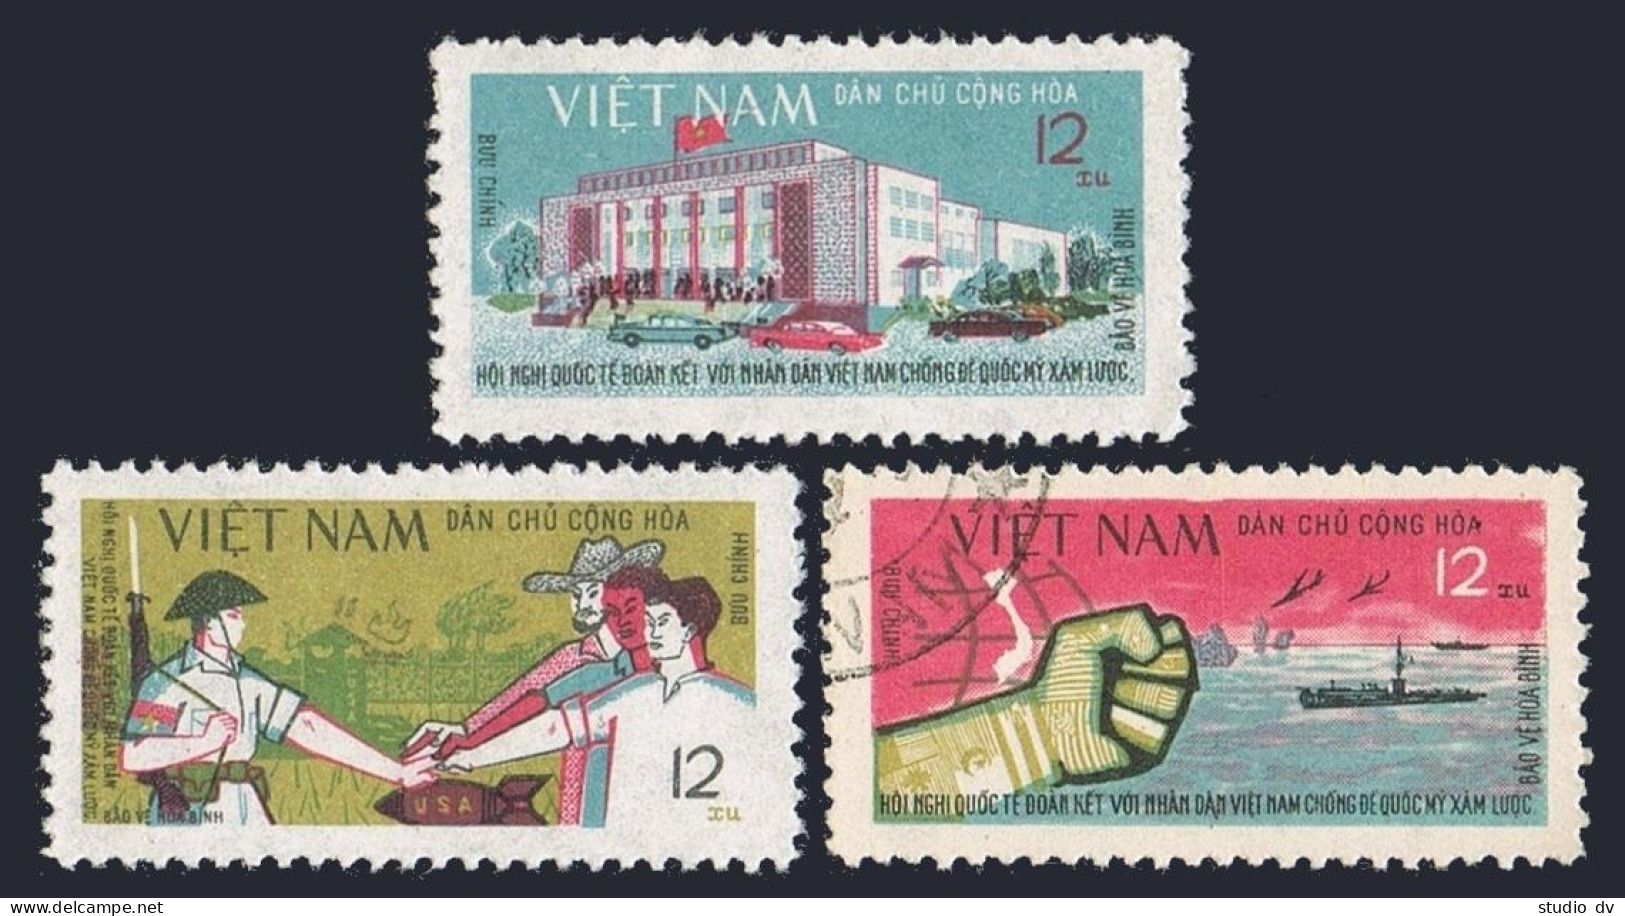 Viet Nam 329a-c,CTO.Mi 339-341. World Solidarity Conference,1964.Ba Dinh Hall, - Vietnam